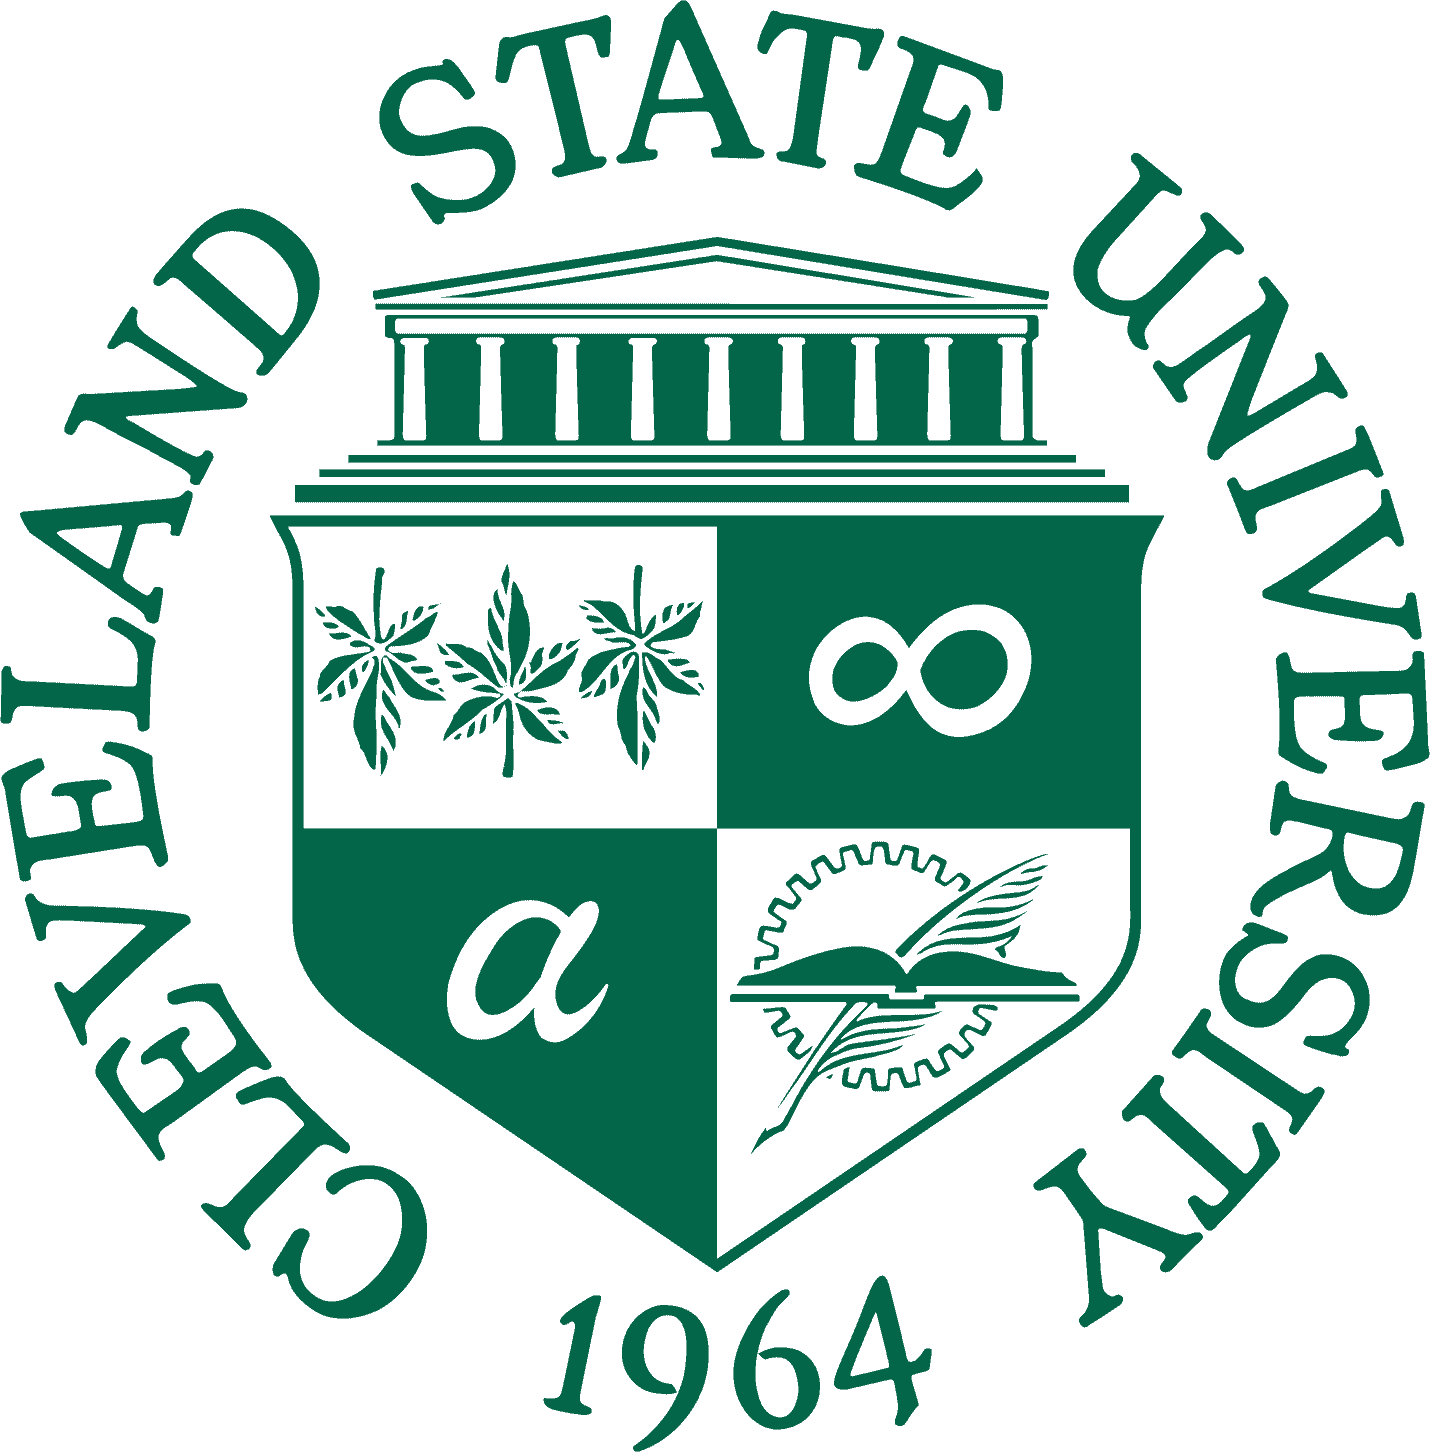 Cleveland State University Logo (CSU) png